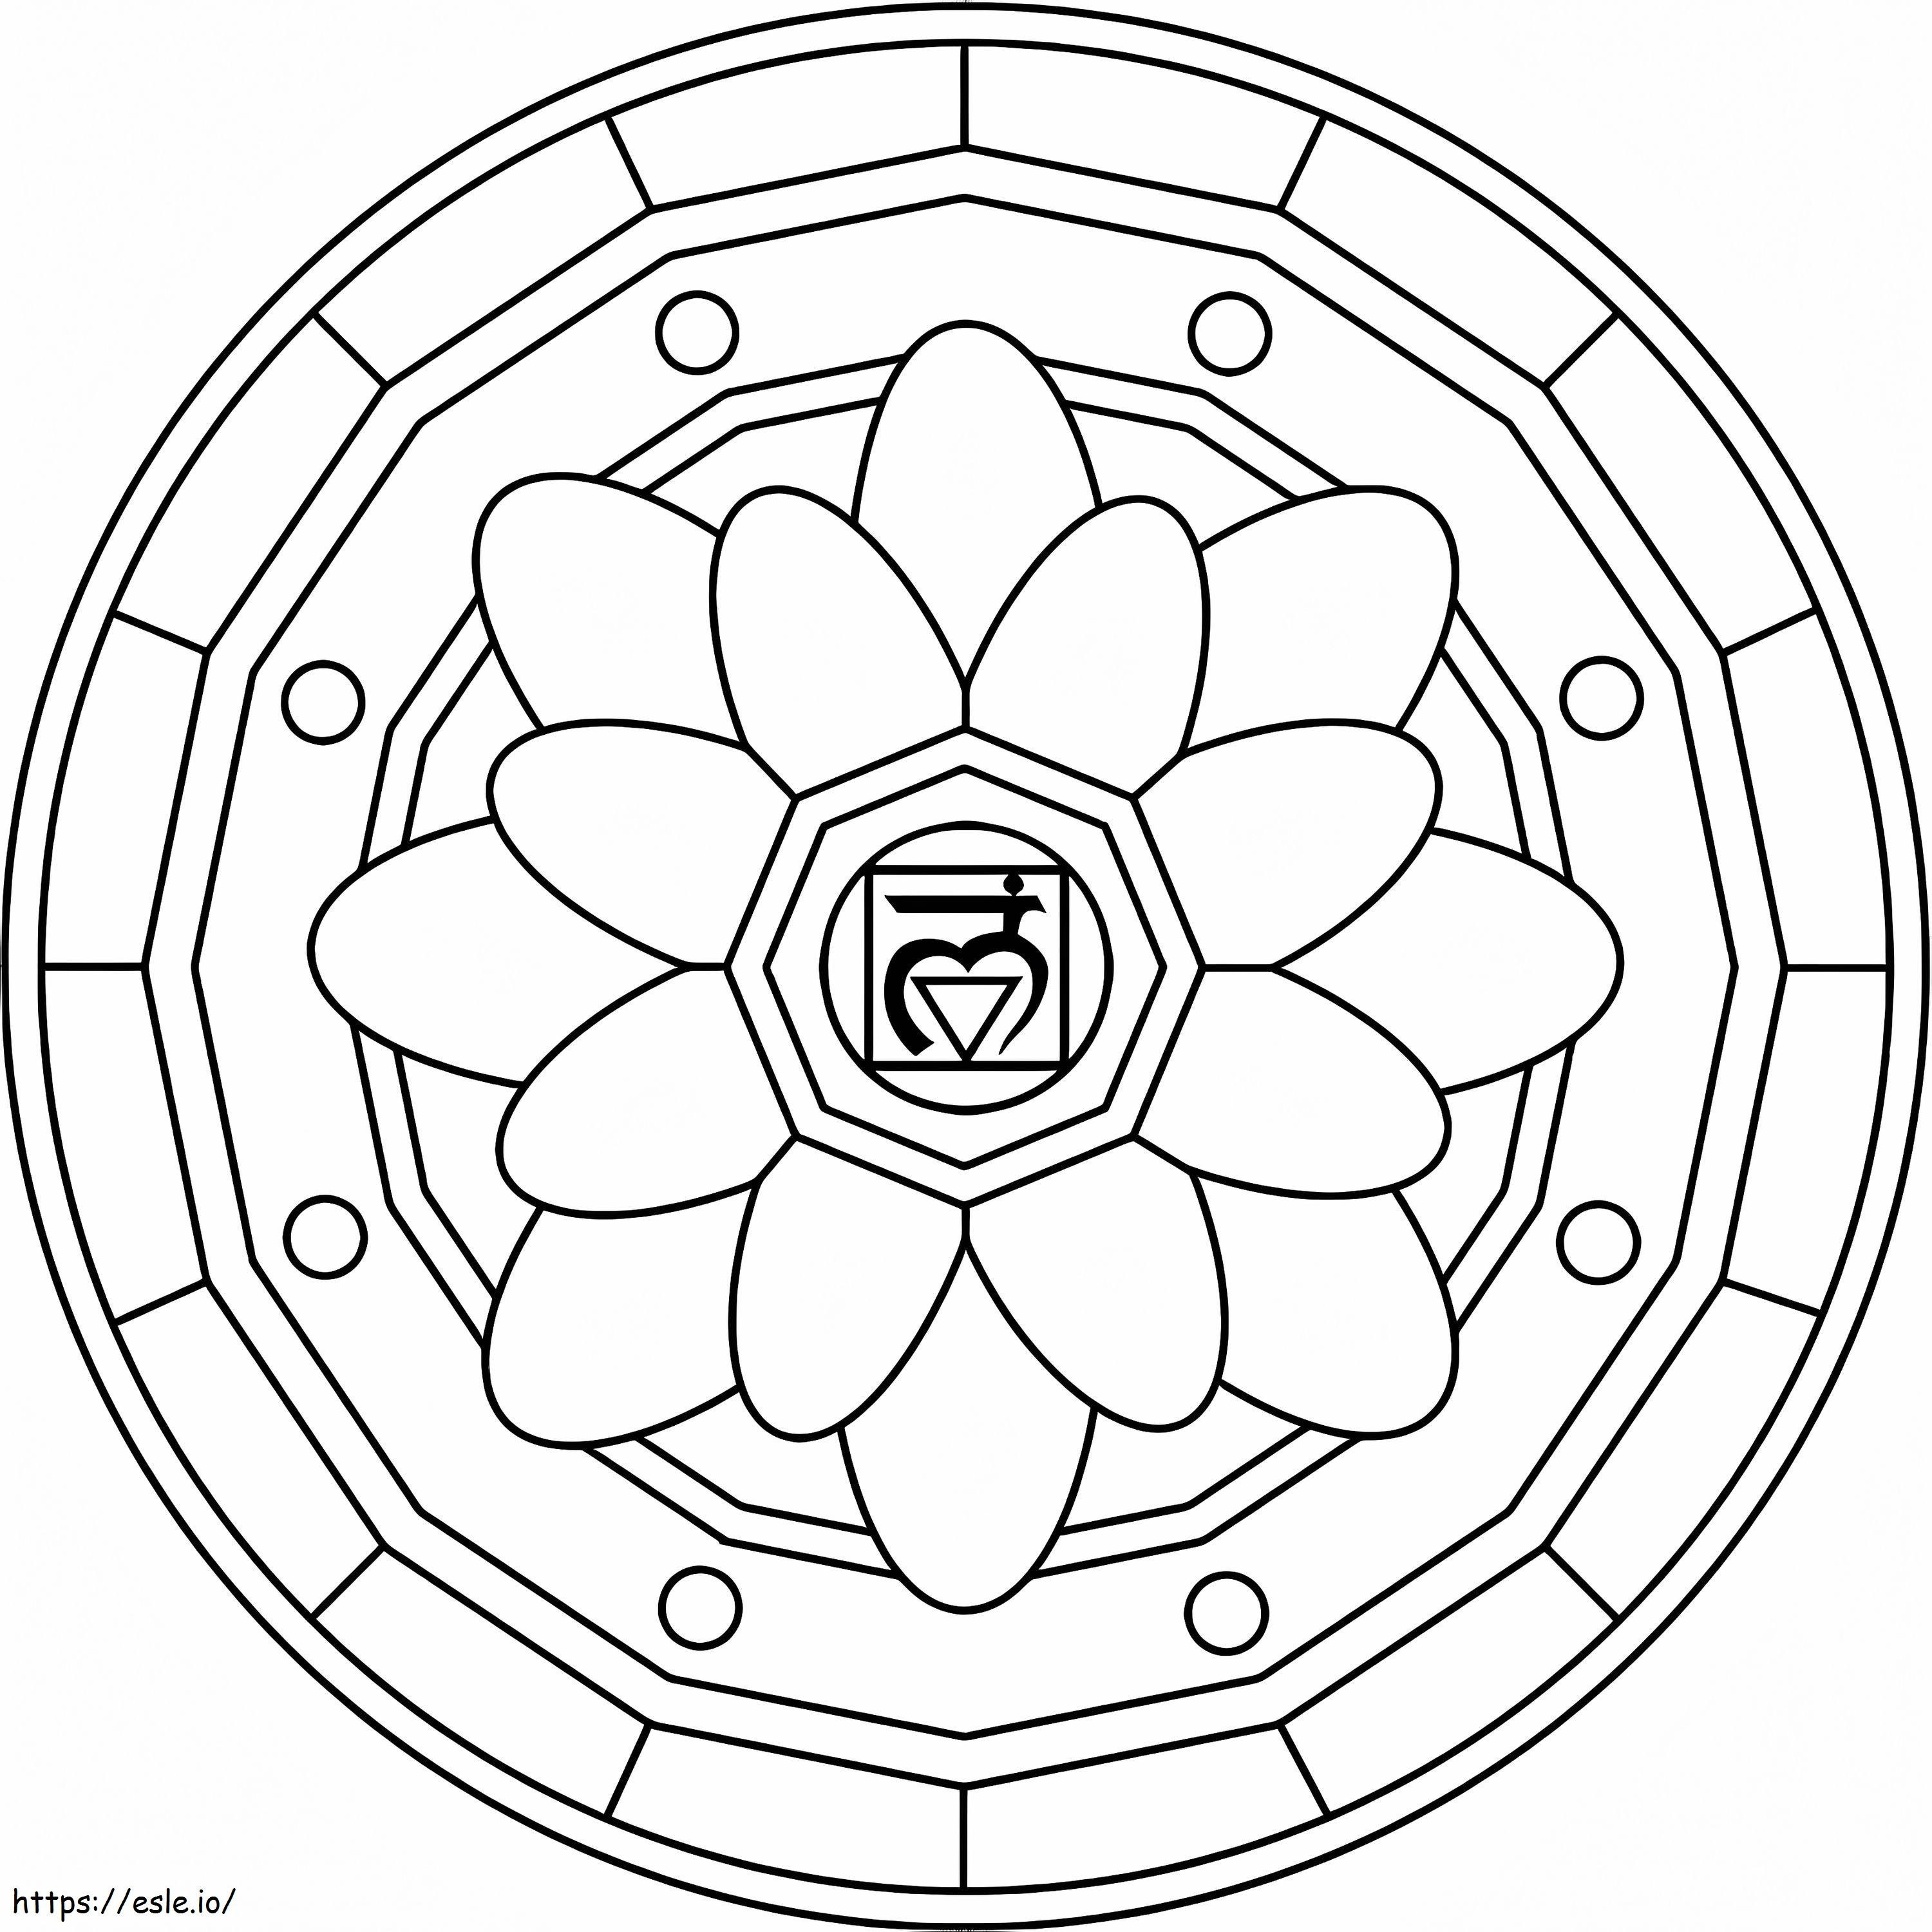 Mandala z symbolami Muladhary kolorowanka